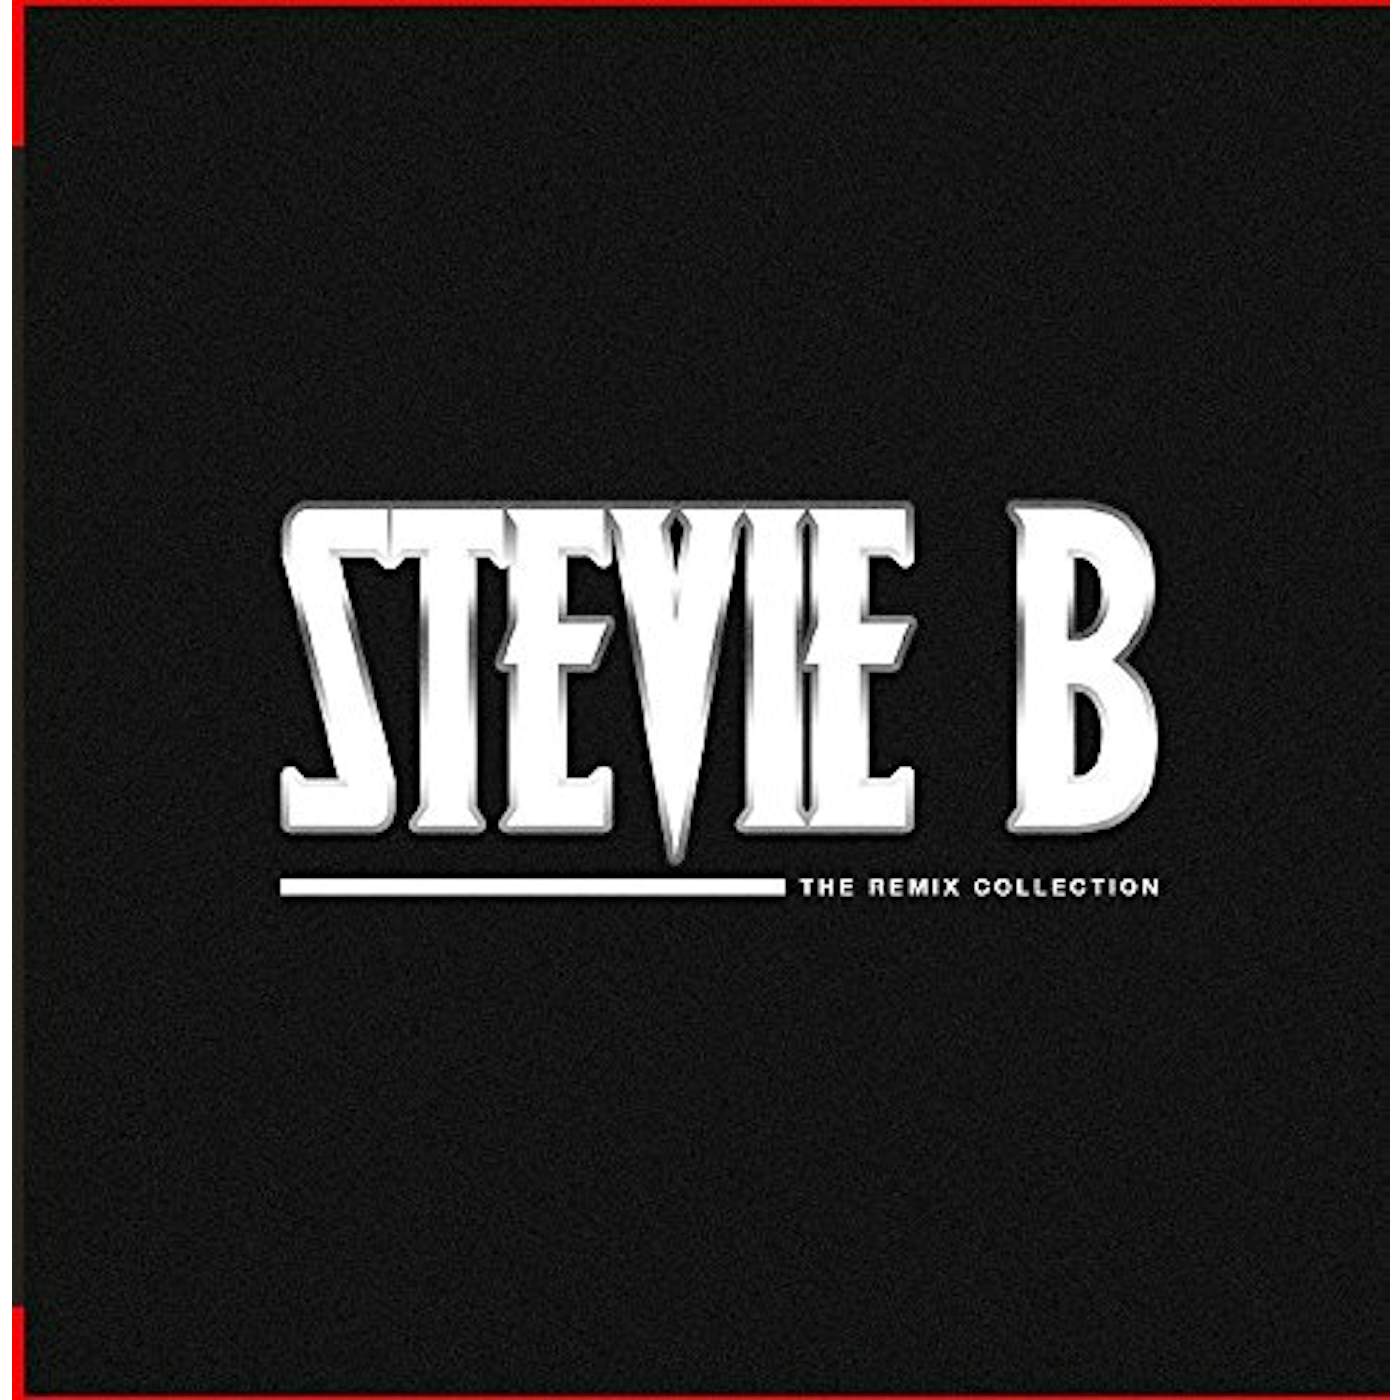 Stevie B REMIX COLLECTION CD